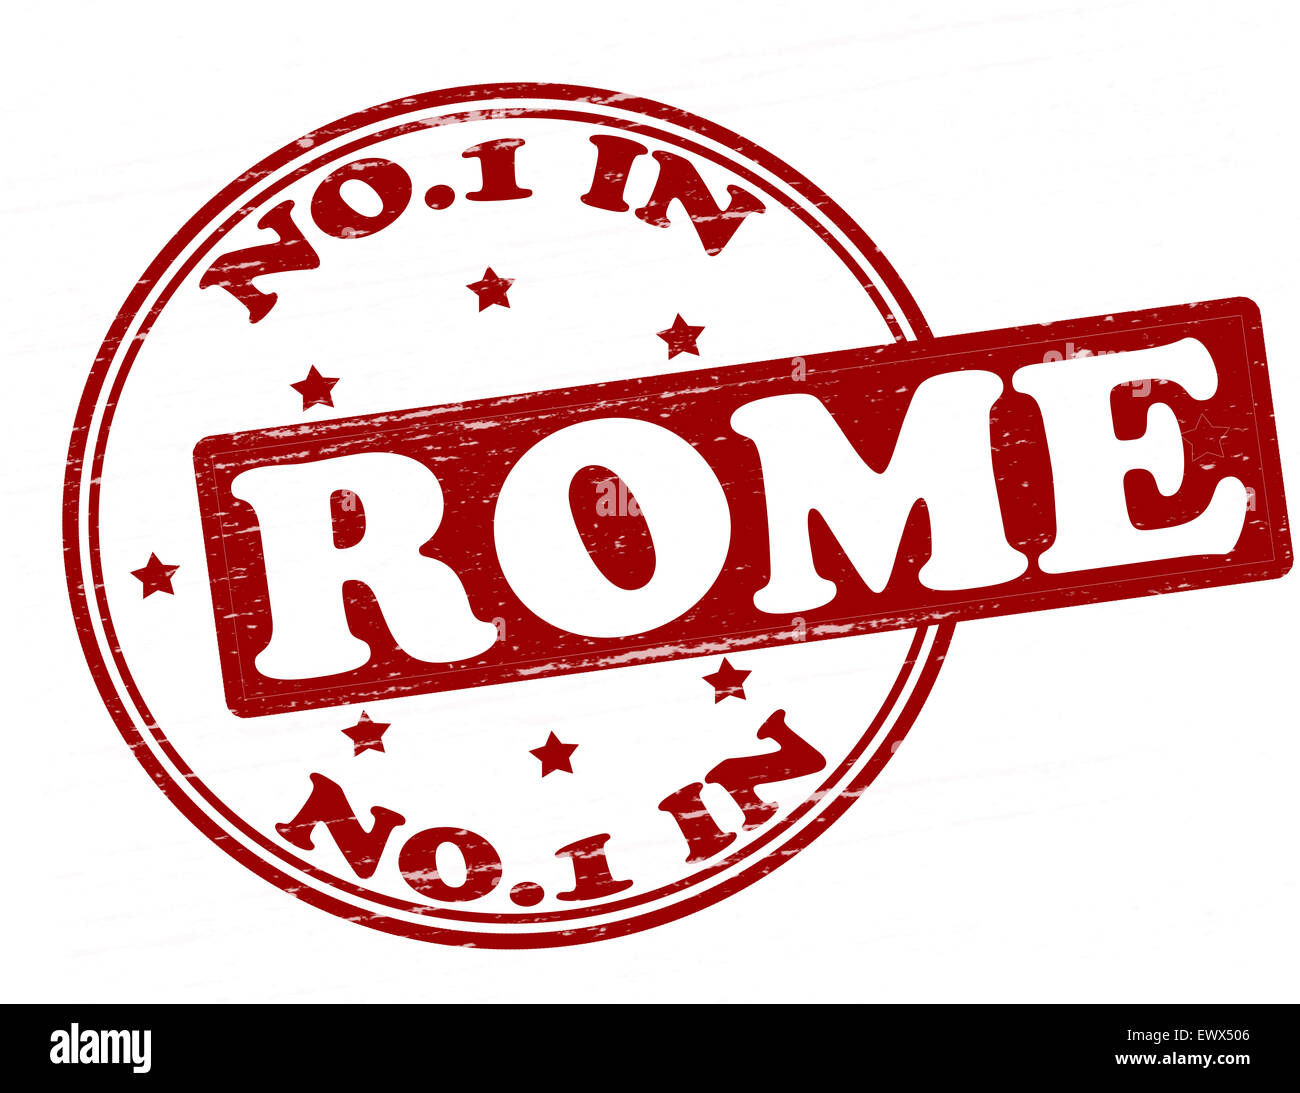 Stempel mit Text in Rom niemand drinnen, Abbildung Stockfoto